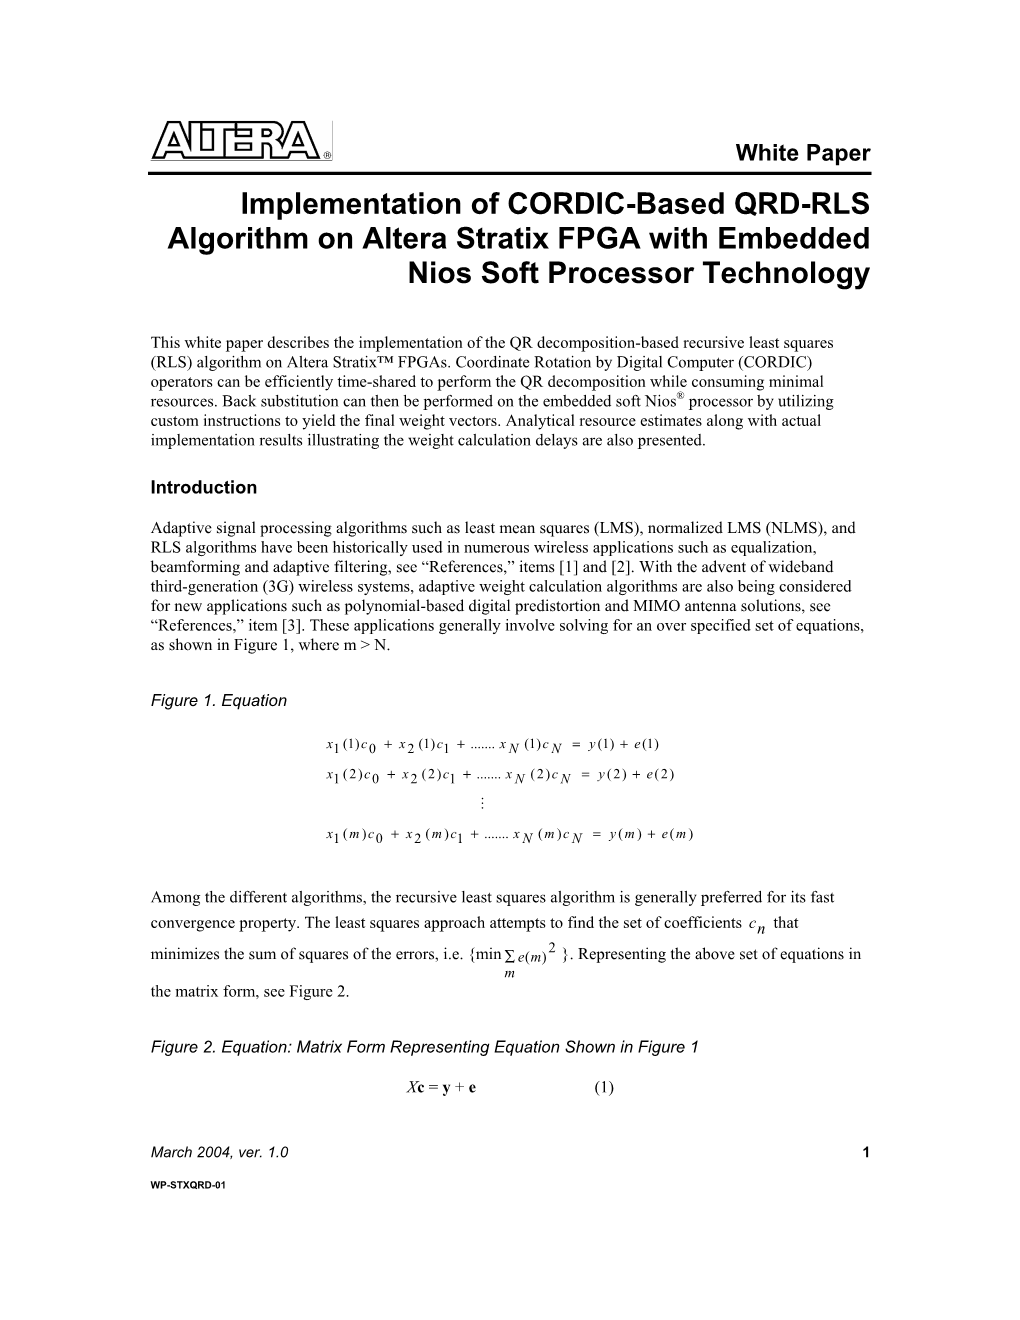 Implementation of CORDIC-Based QRD-RLS Algorithm on Altera Stratix FPGA with Embedded Nios Soft Processor Technology